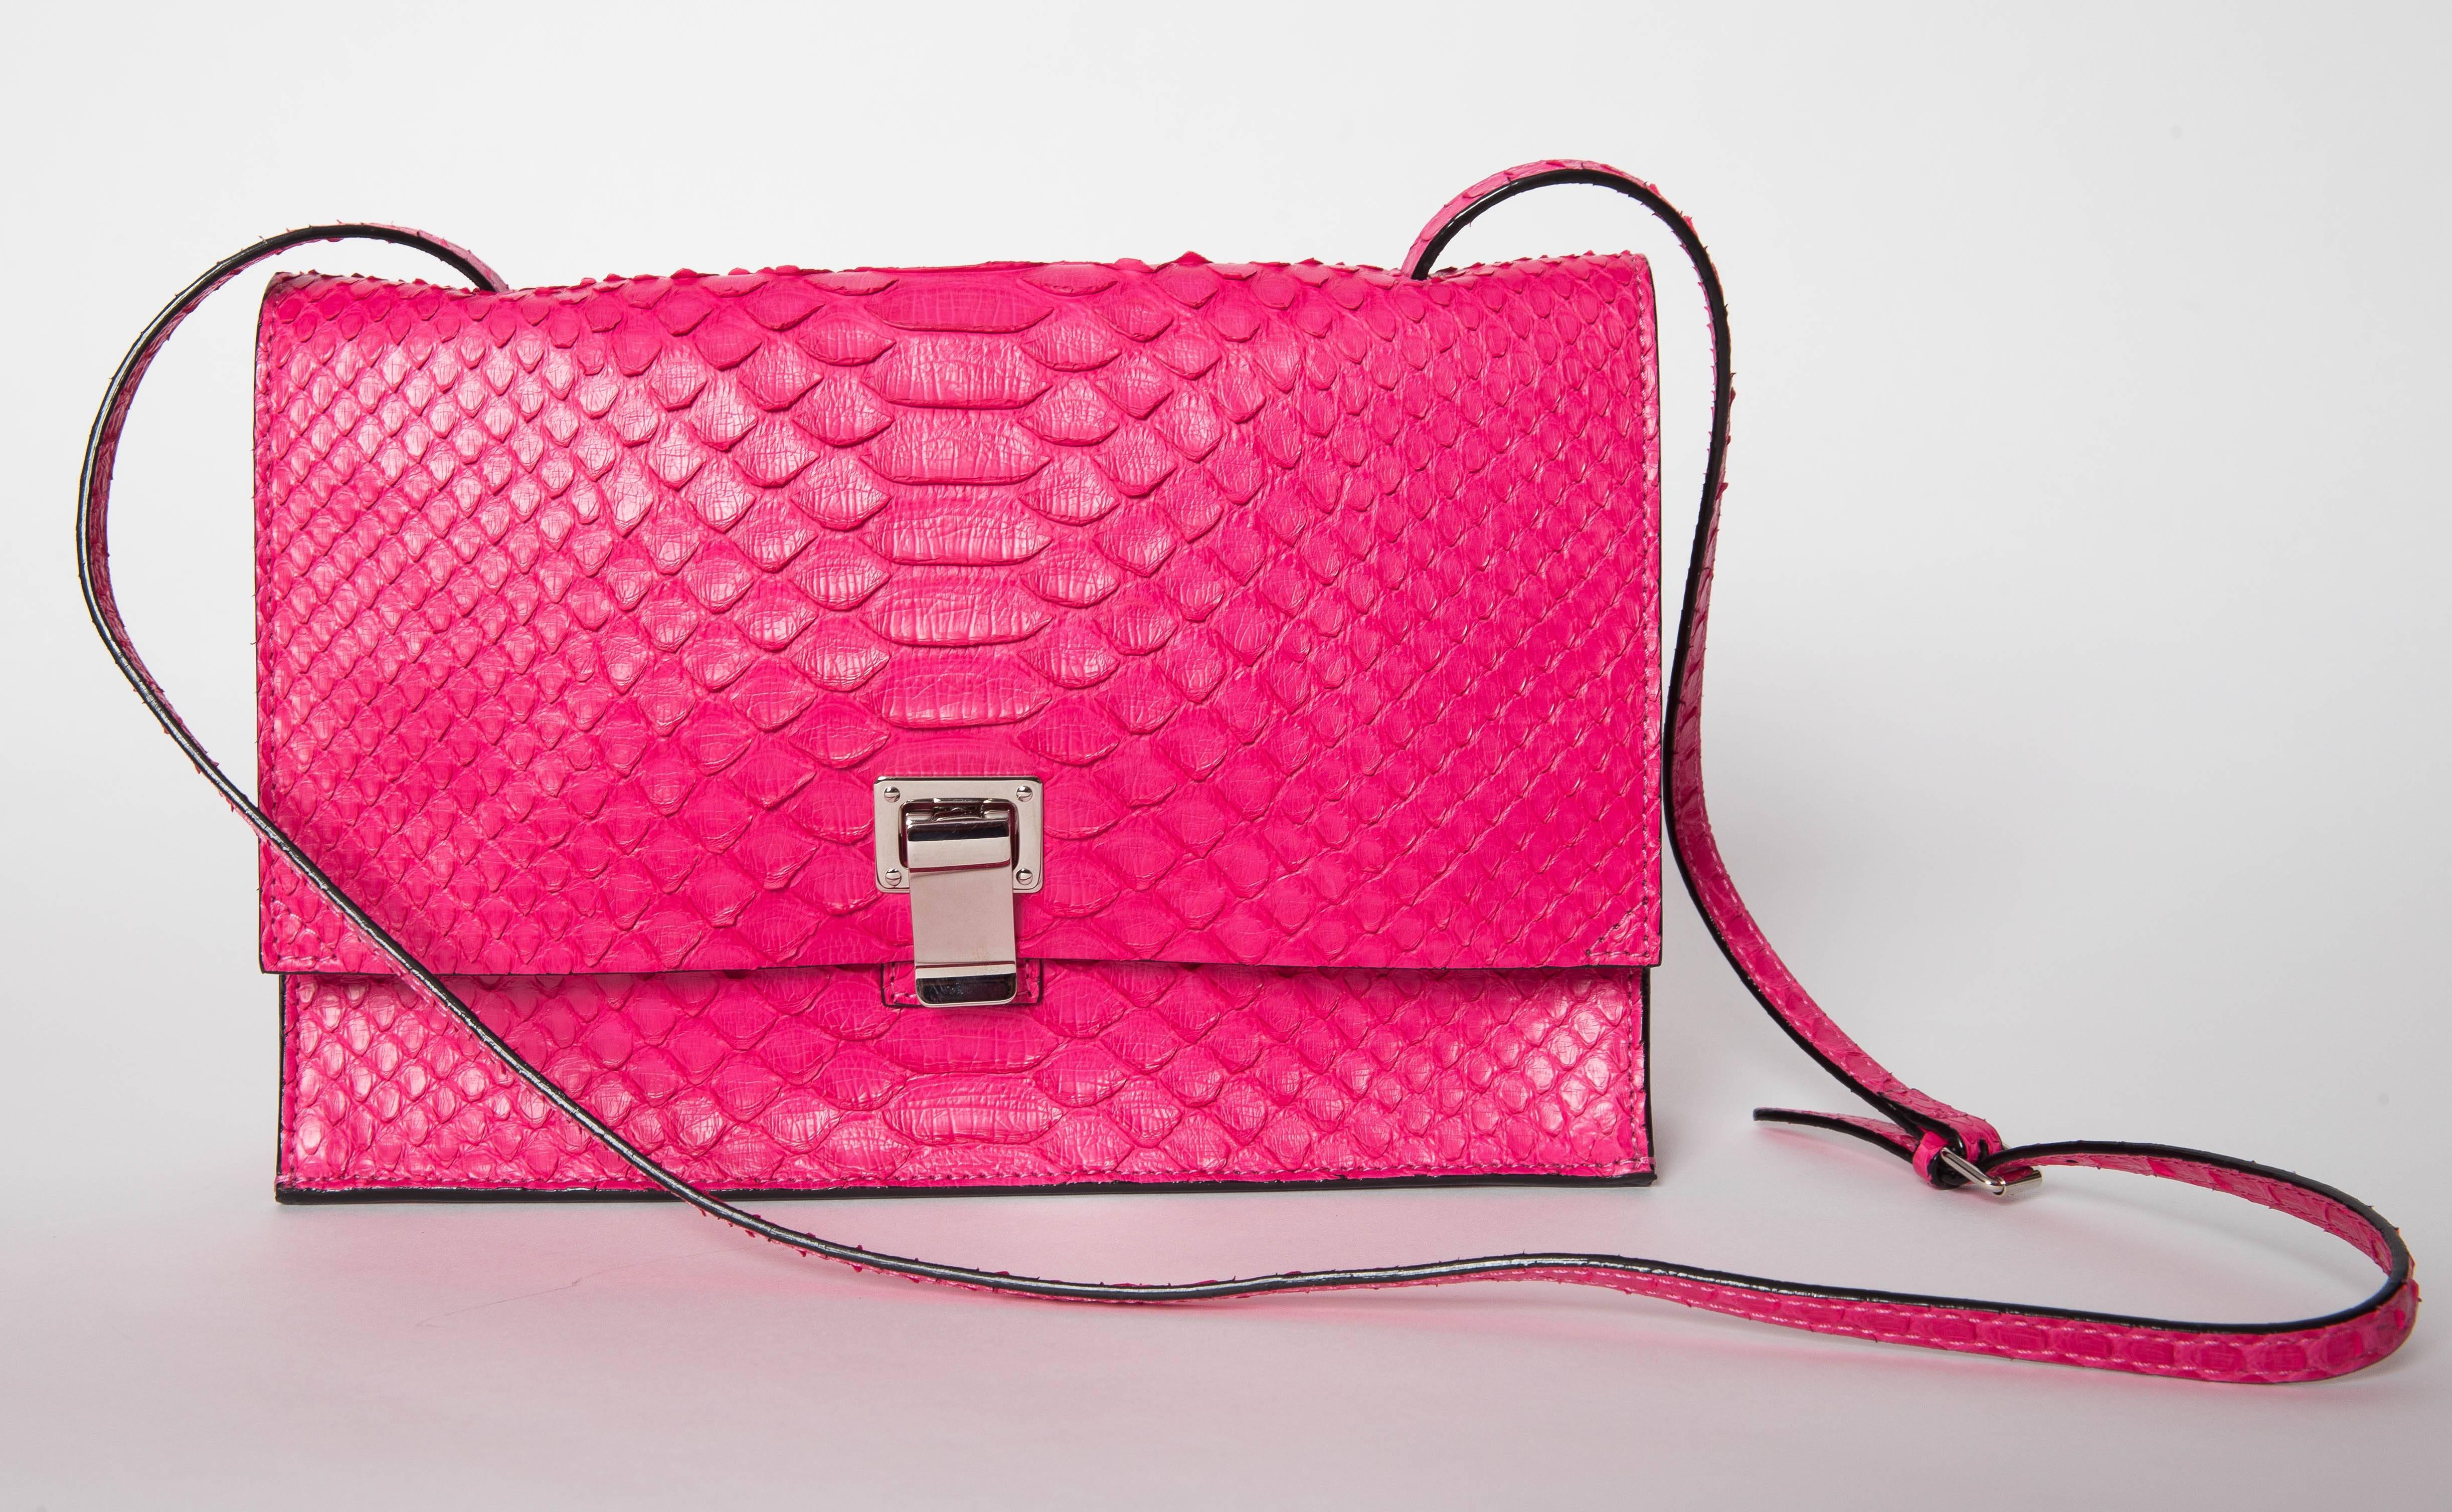 Proenza Schouler Hot Pink Python Shoulder Bag with Palladium Hardware For Sale 1